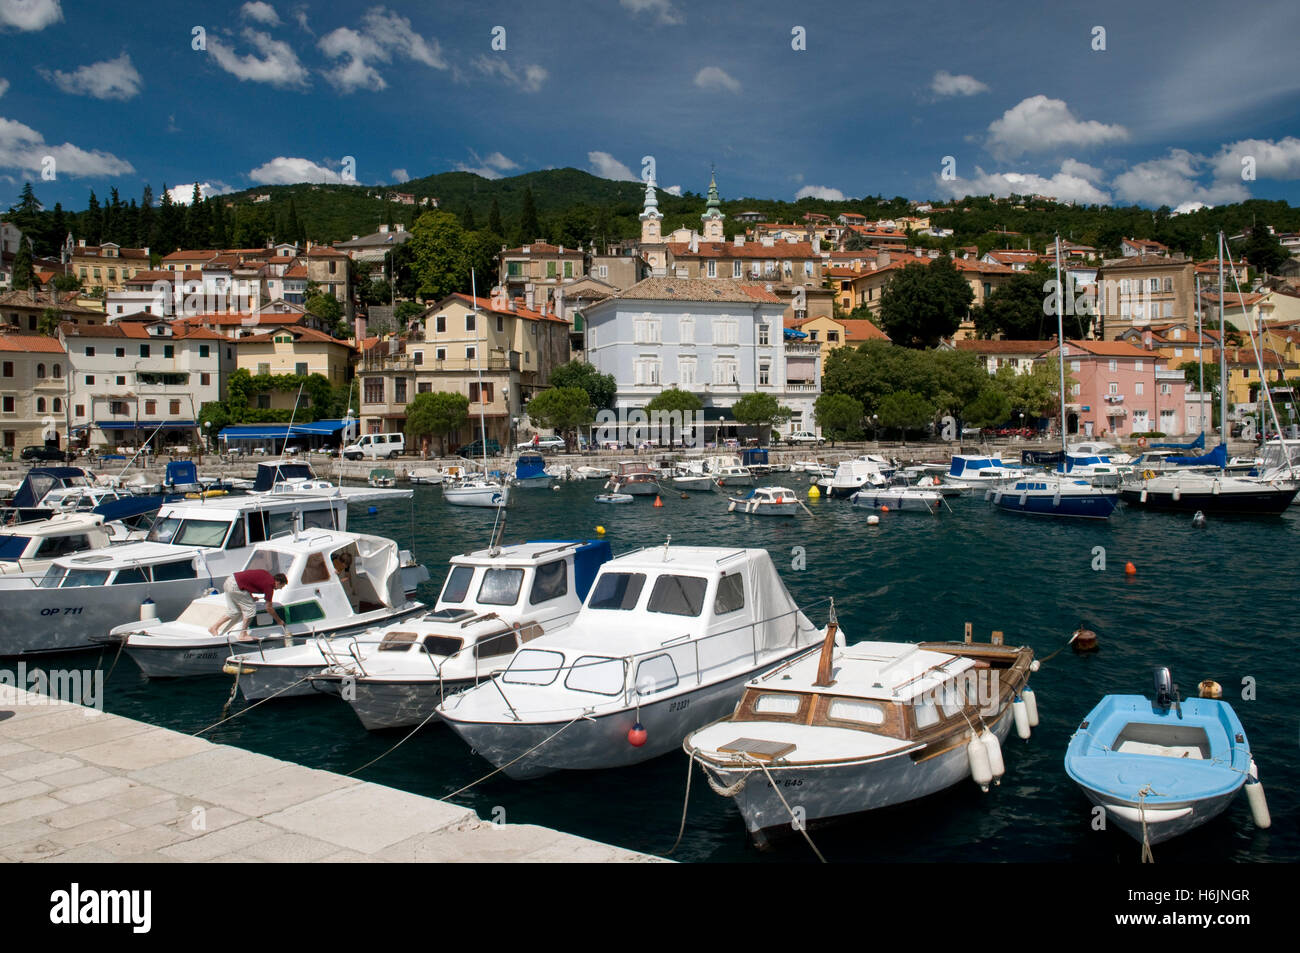 Port and townscape, Volosko, Kvarner Gulf, Croatia, Europe Stock Photo